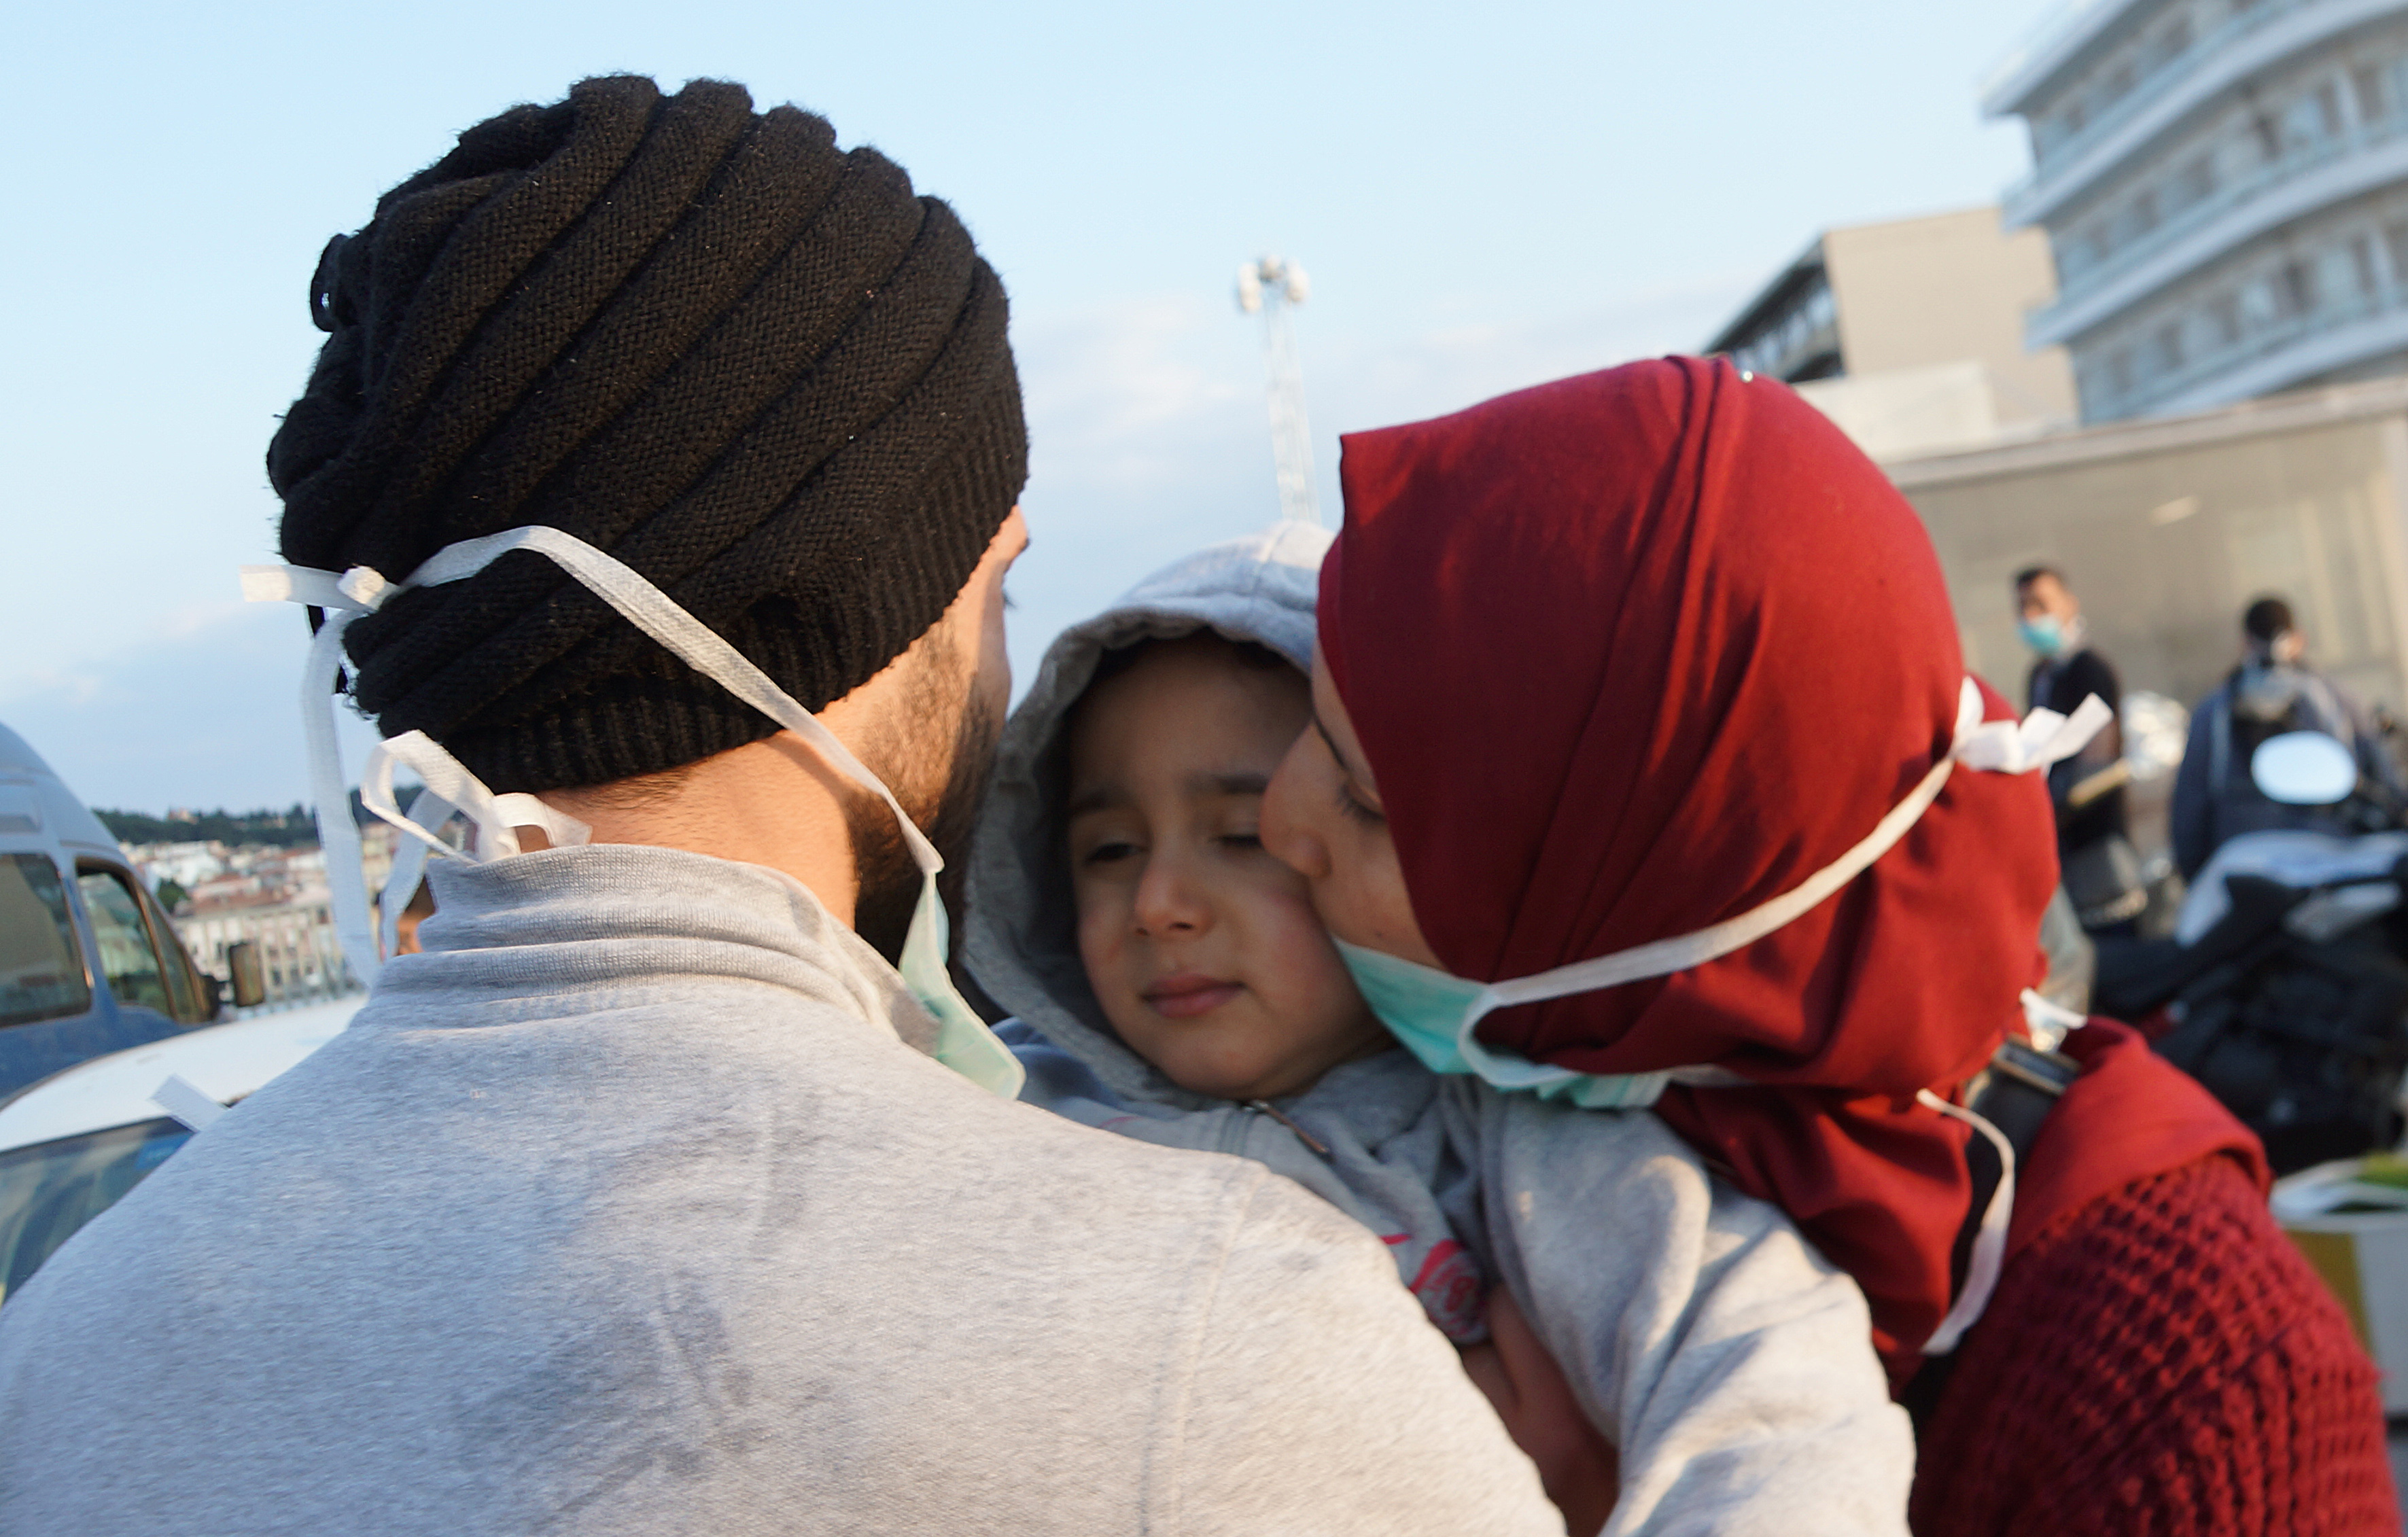 OHE: Η Ευρώπη να βοηθήσει Ελλάδα και Ιταλία στο μεταναστευτικό